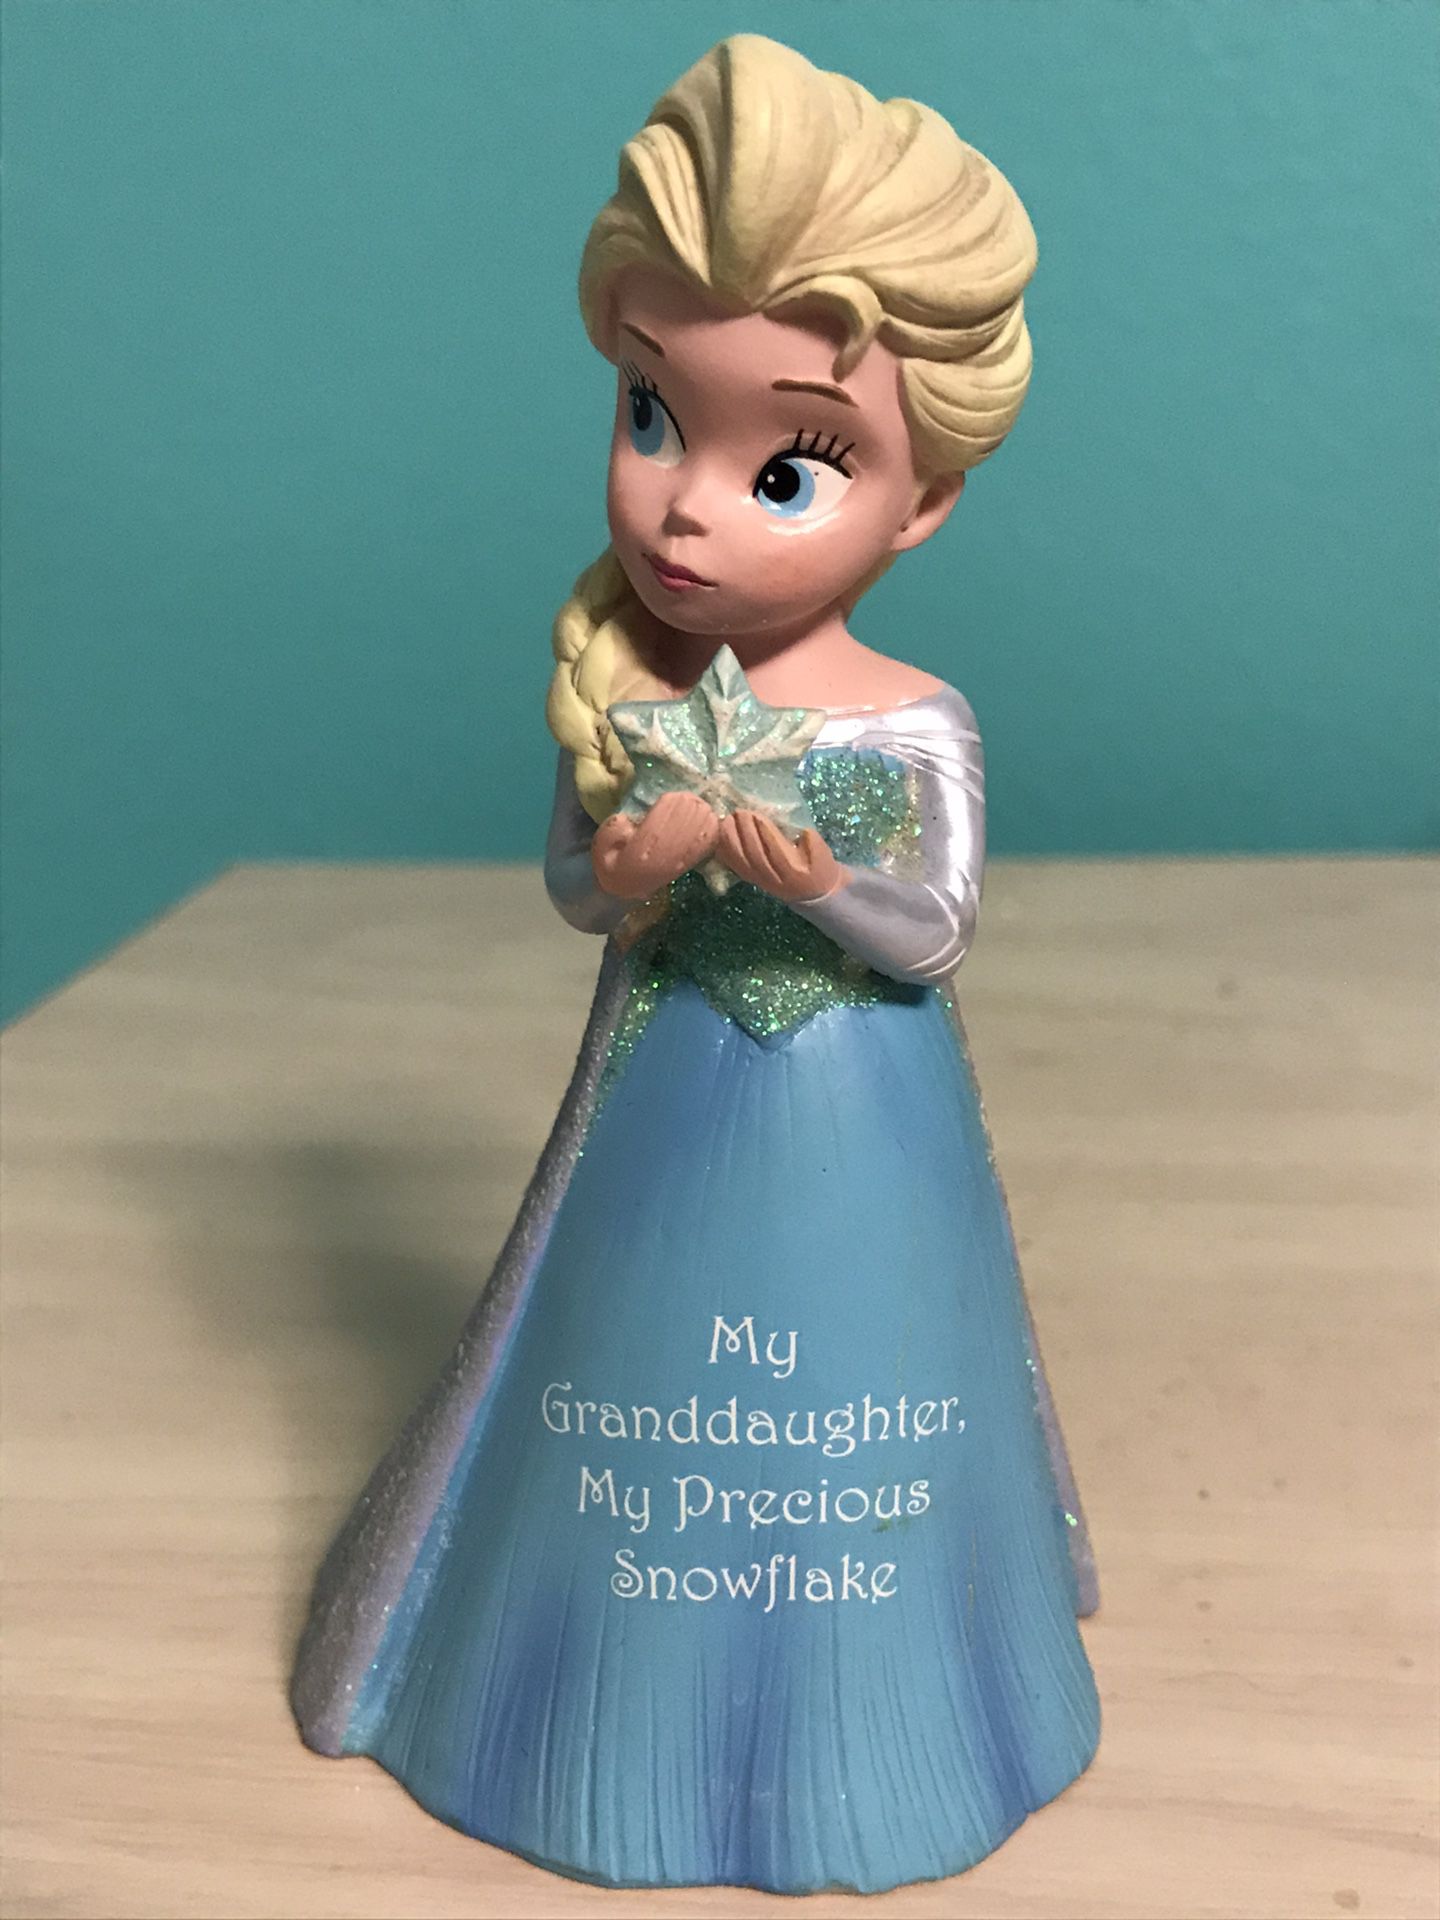 Disney Princess Granddaughter Collectible Figurine